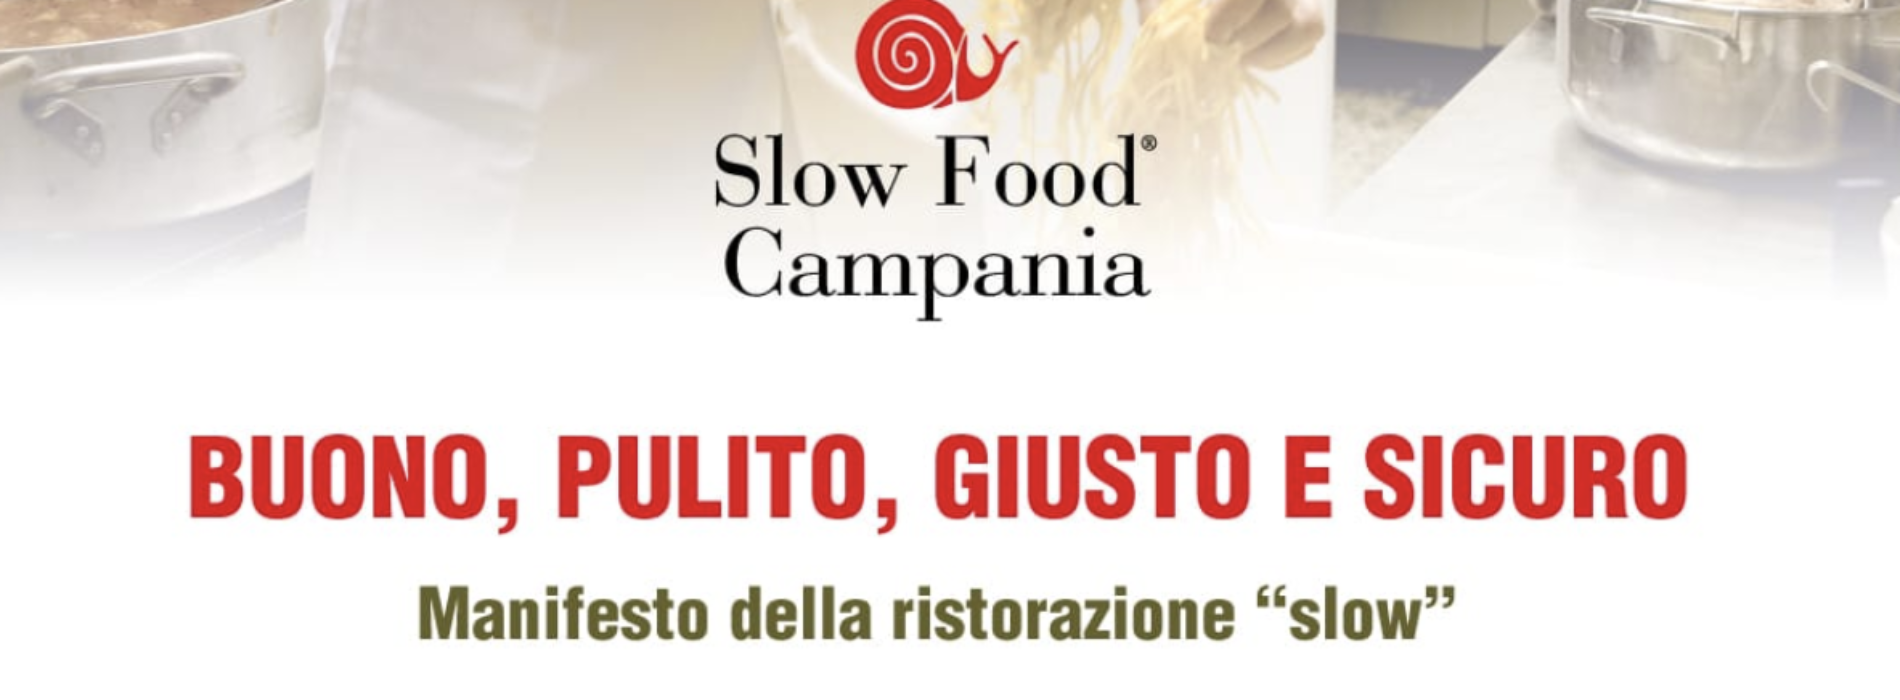 Operazione ristoranti sicuri, manifesto di Slow Food Campania